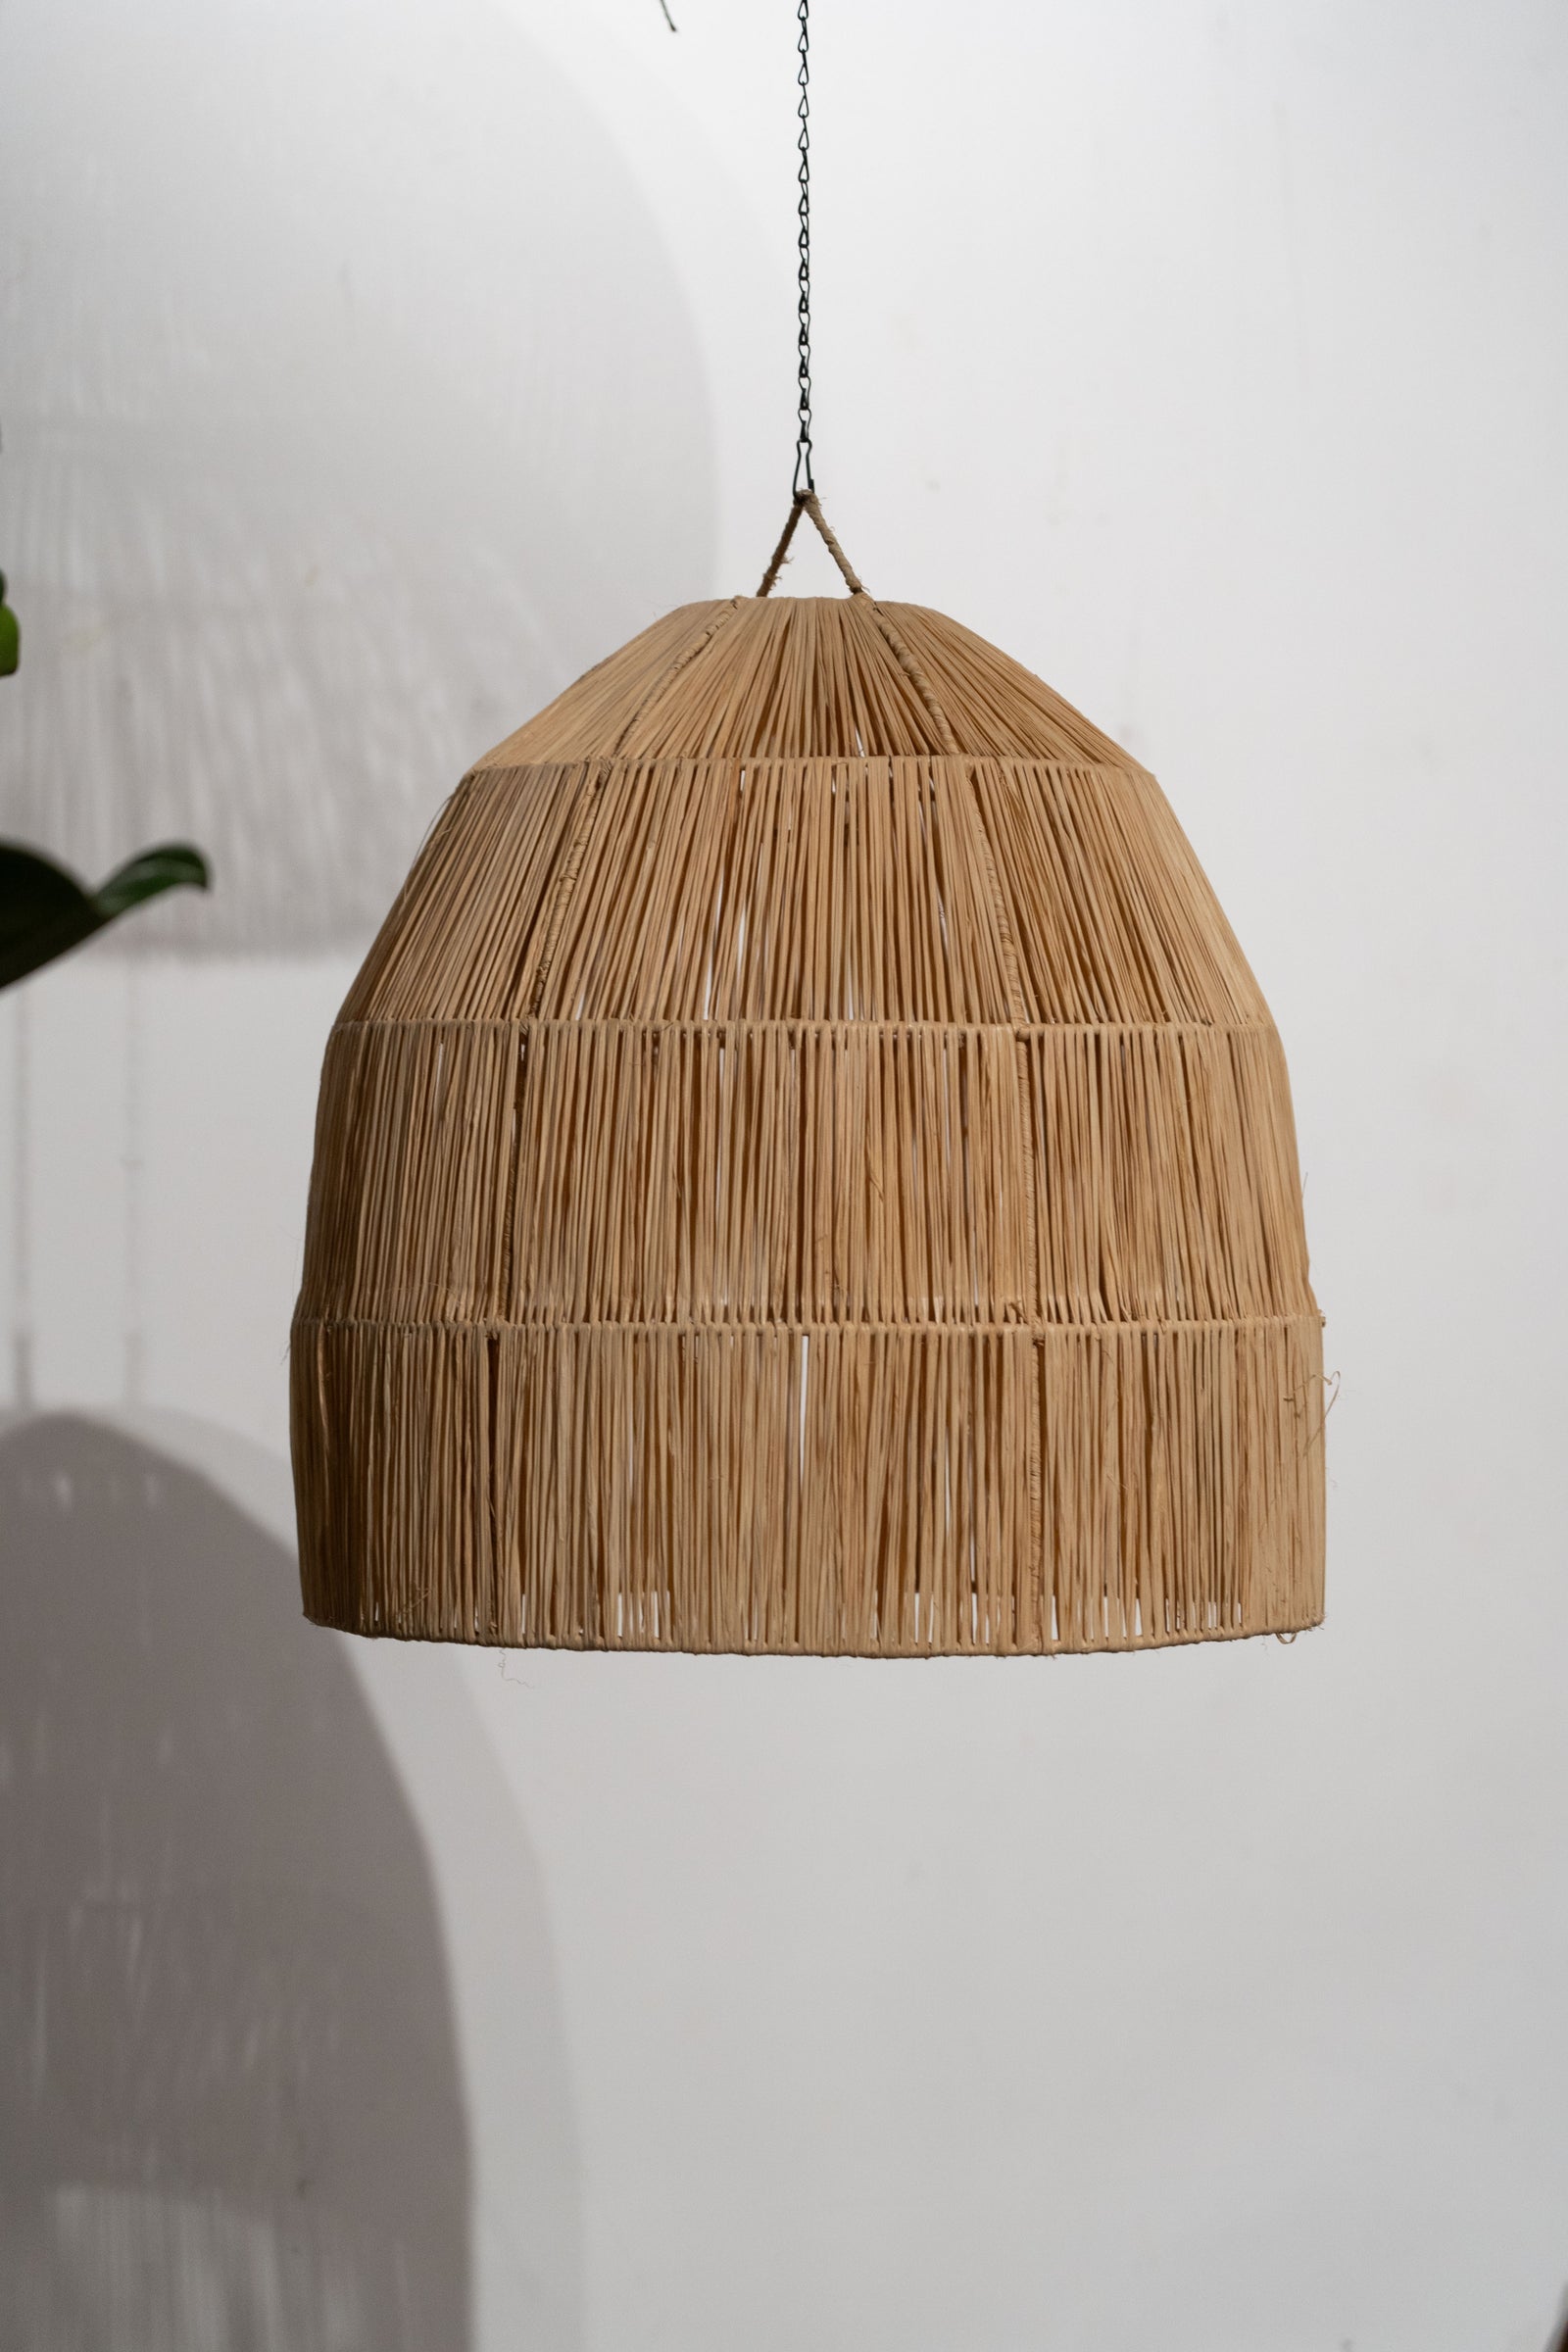 Moroco Jute Hand Woven Lamp Shade - M